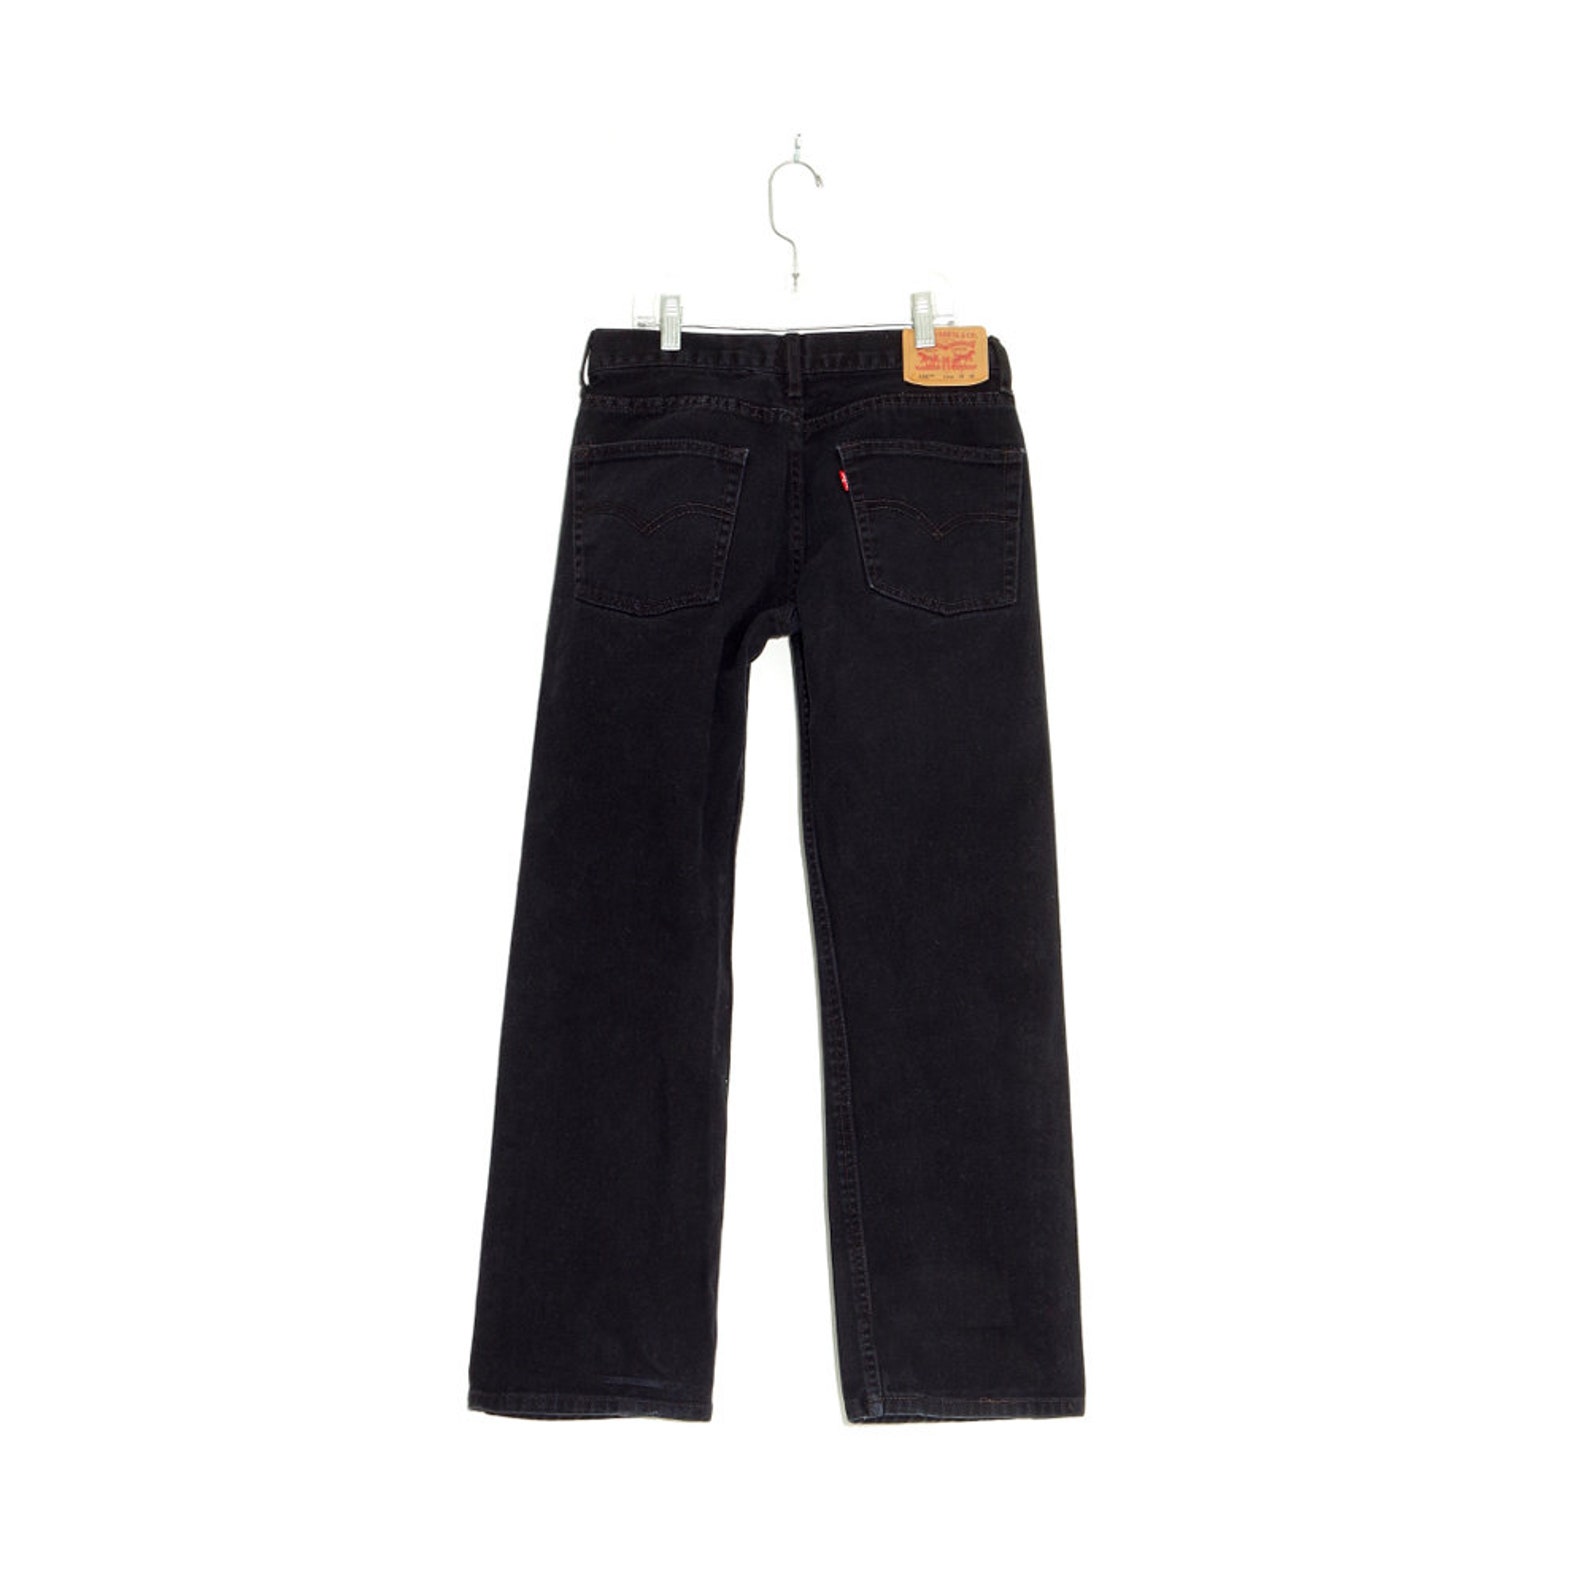 LEVI'S 550 JEANS black denim jeans super flattering fit | Etsy